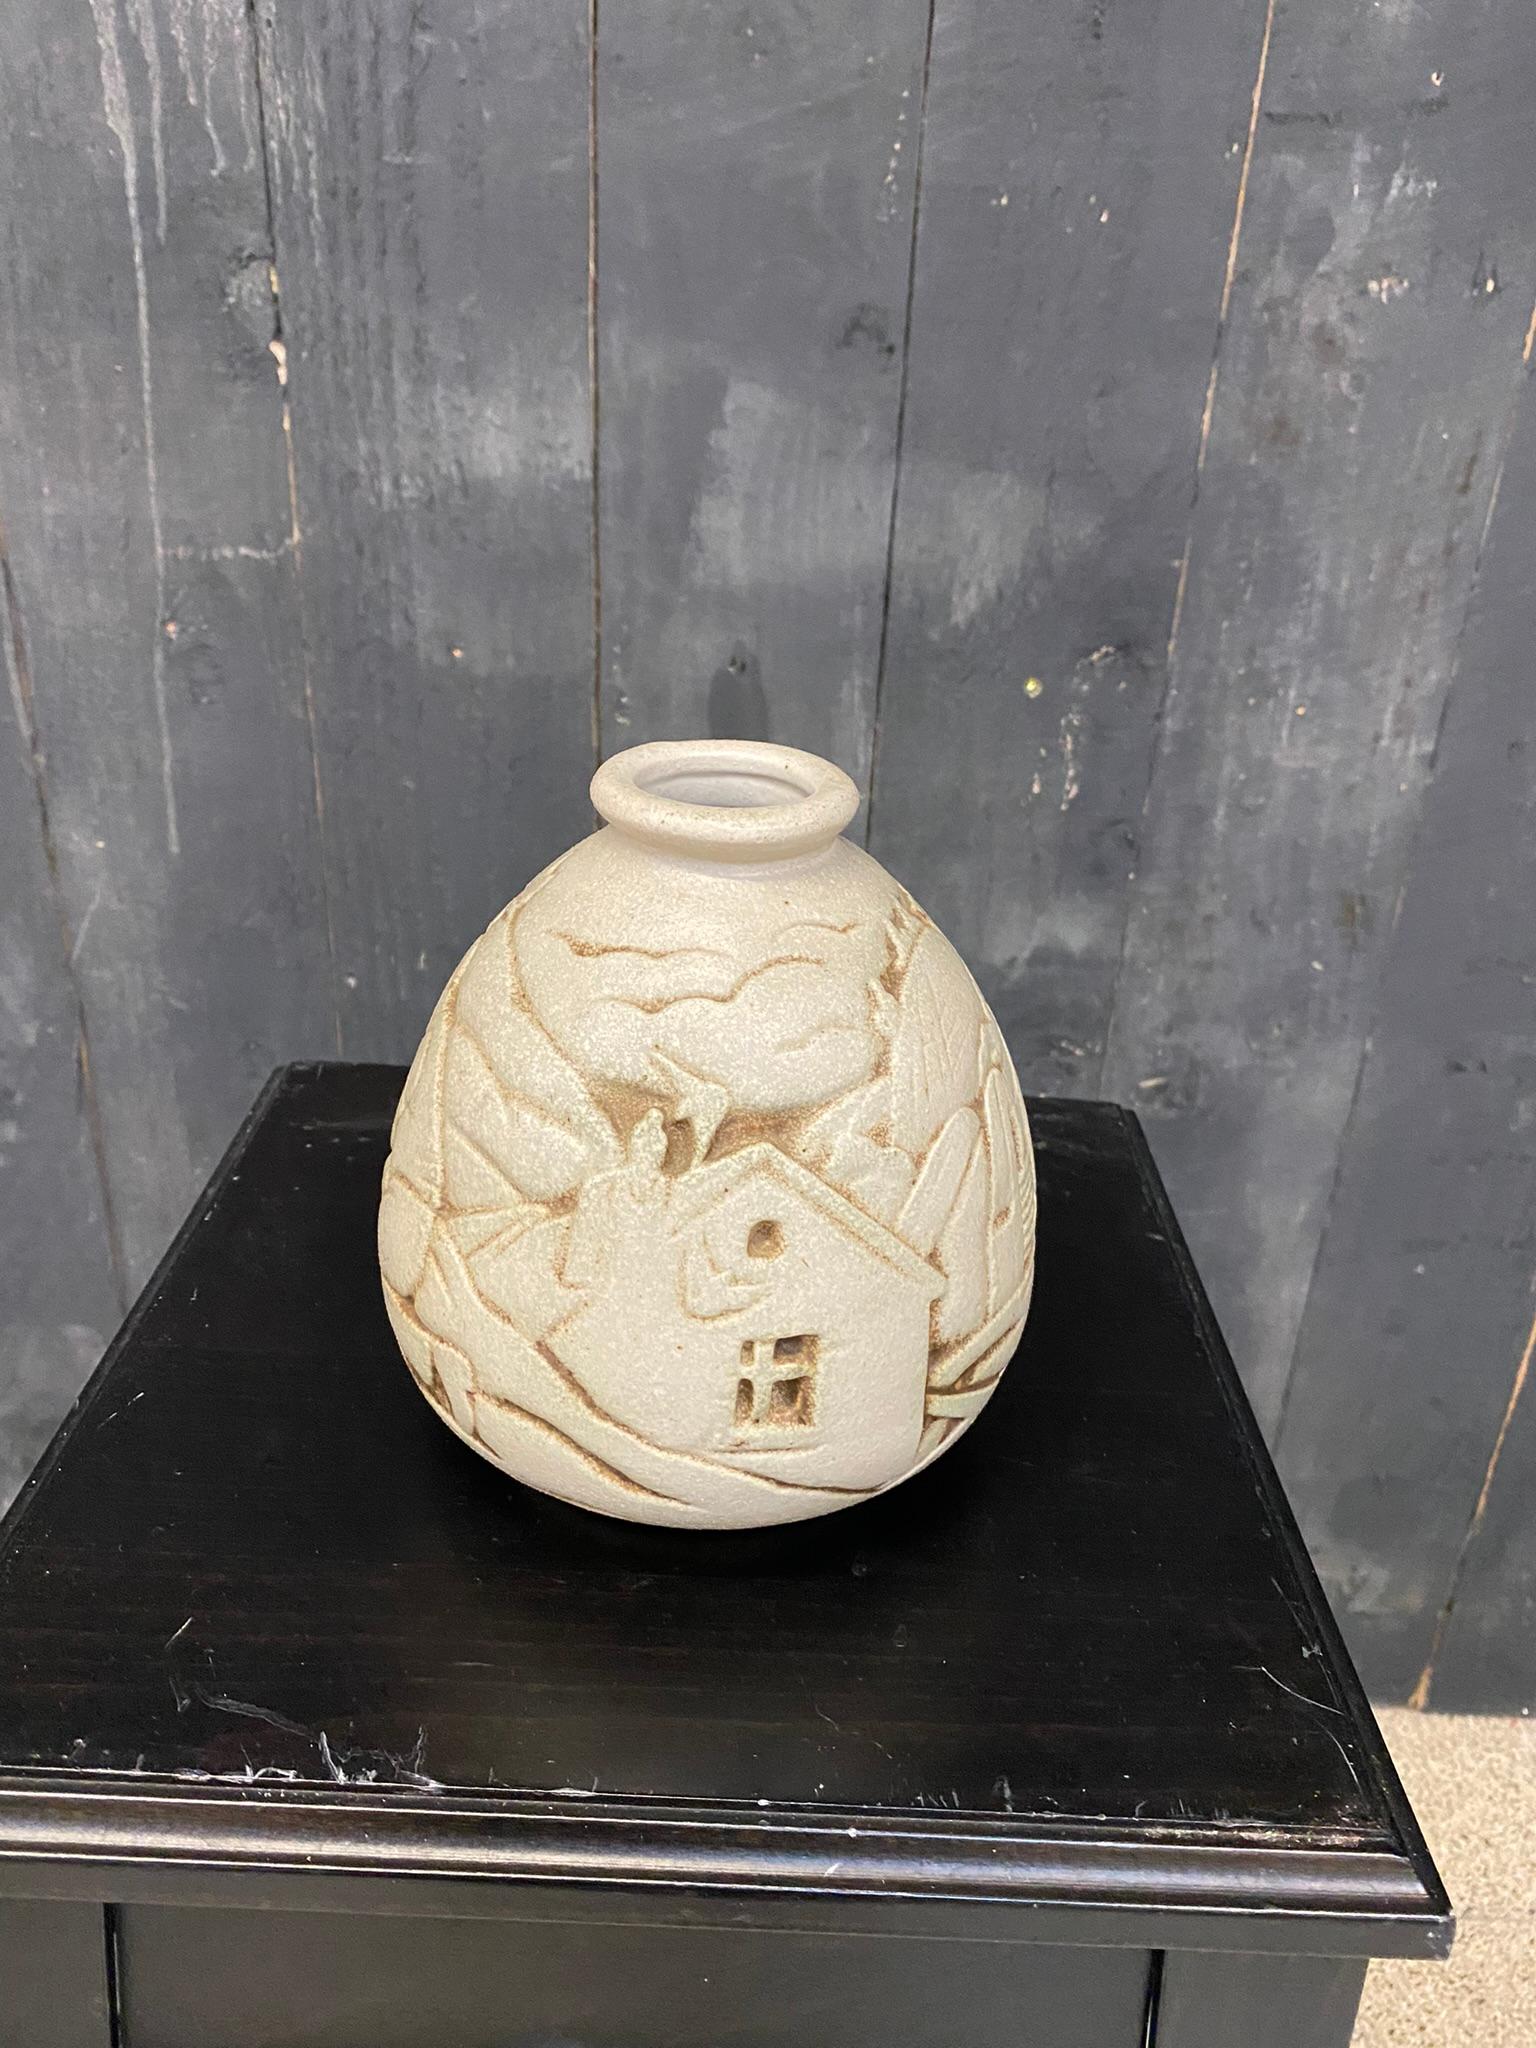 Memories of Luneville Faincerie
Signed LEGRAND Model 217 J ceramic vase with and industrial design.